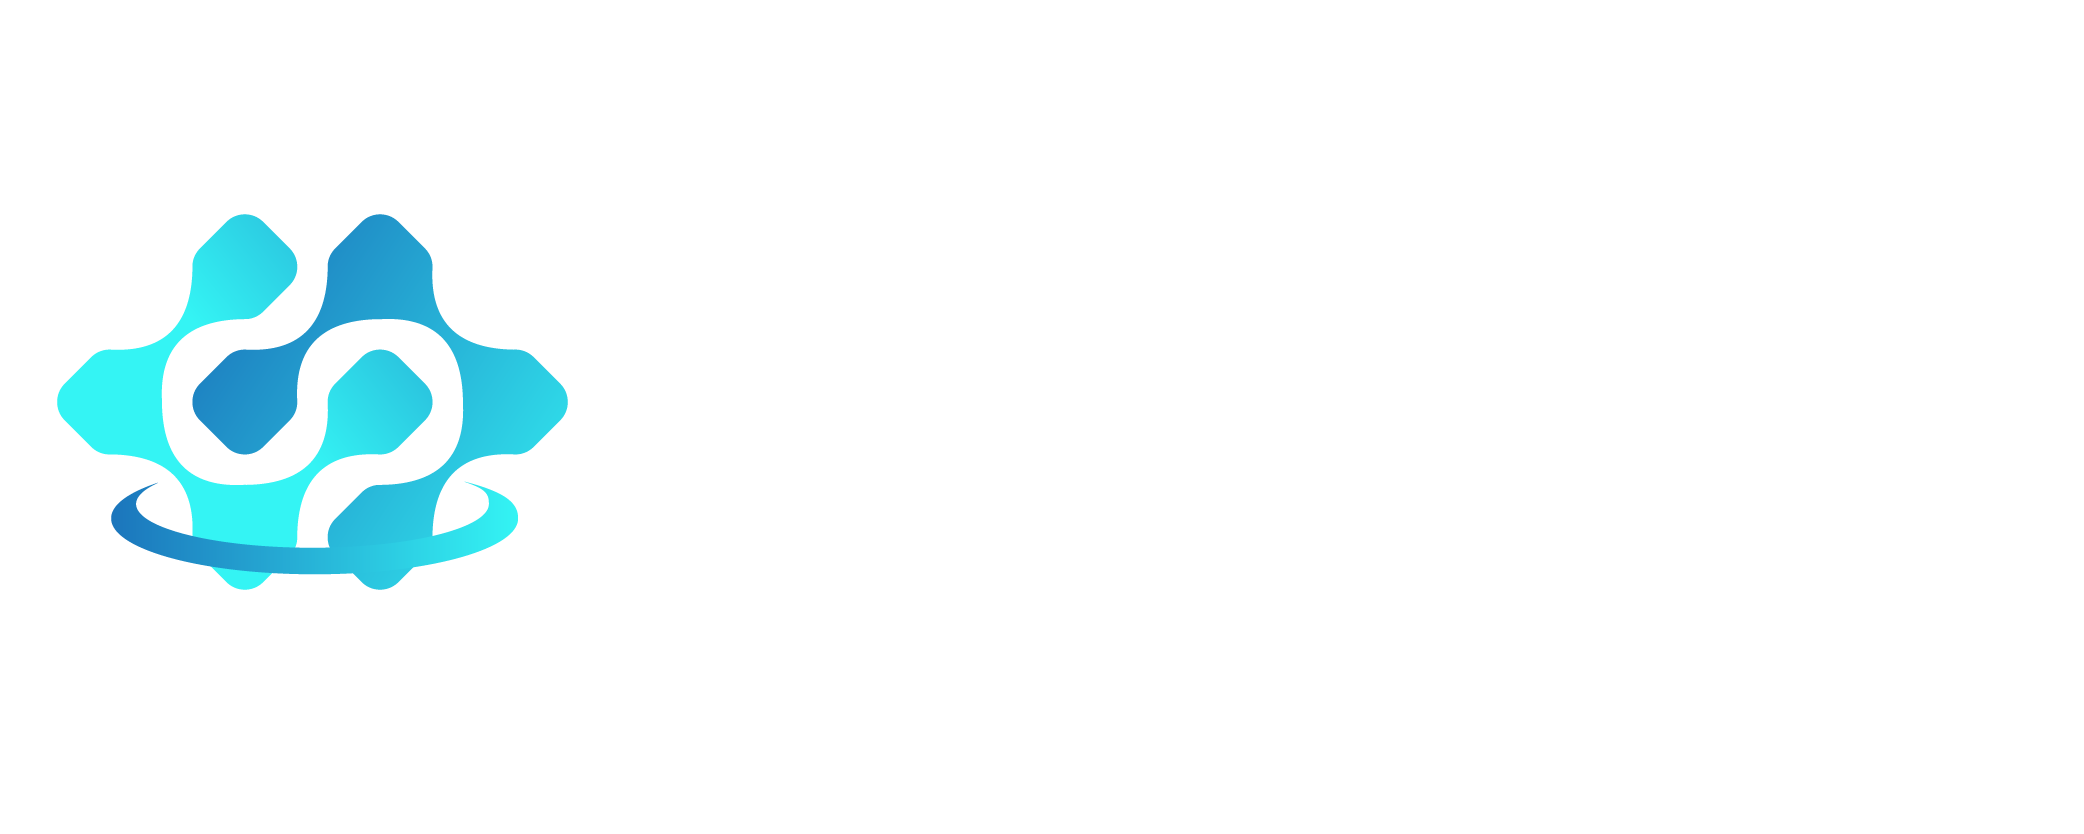 720KB – Information Technology Bytes